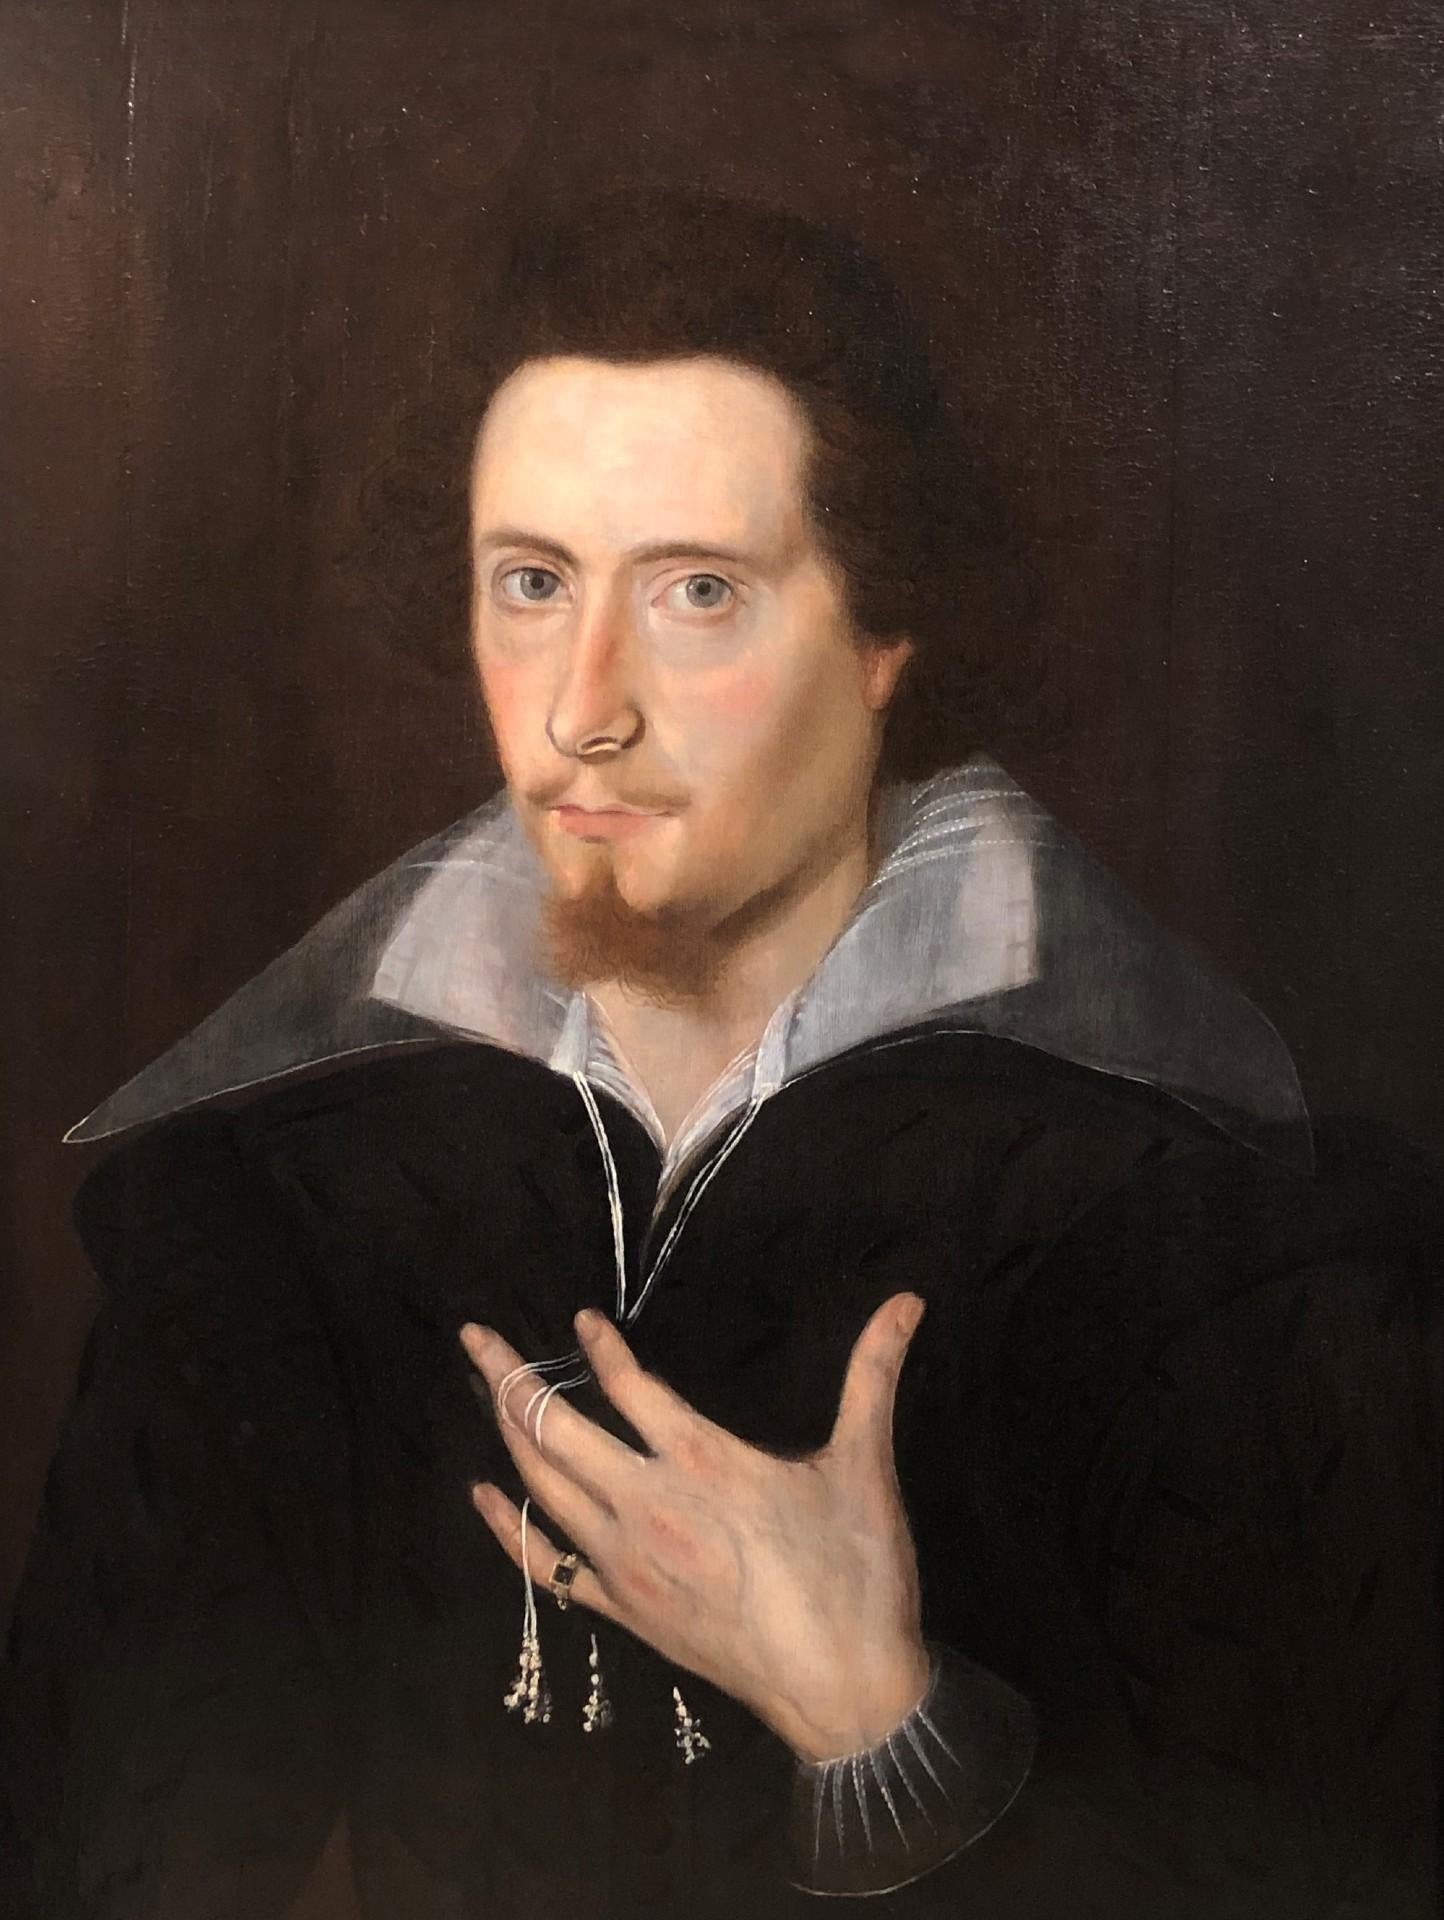 Mid 16th Century English School Portrait Painting - Possible Portrait of William Shakespeare